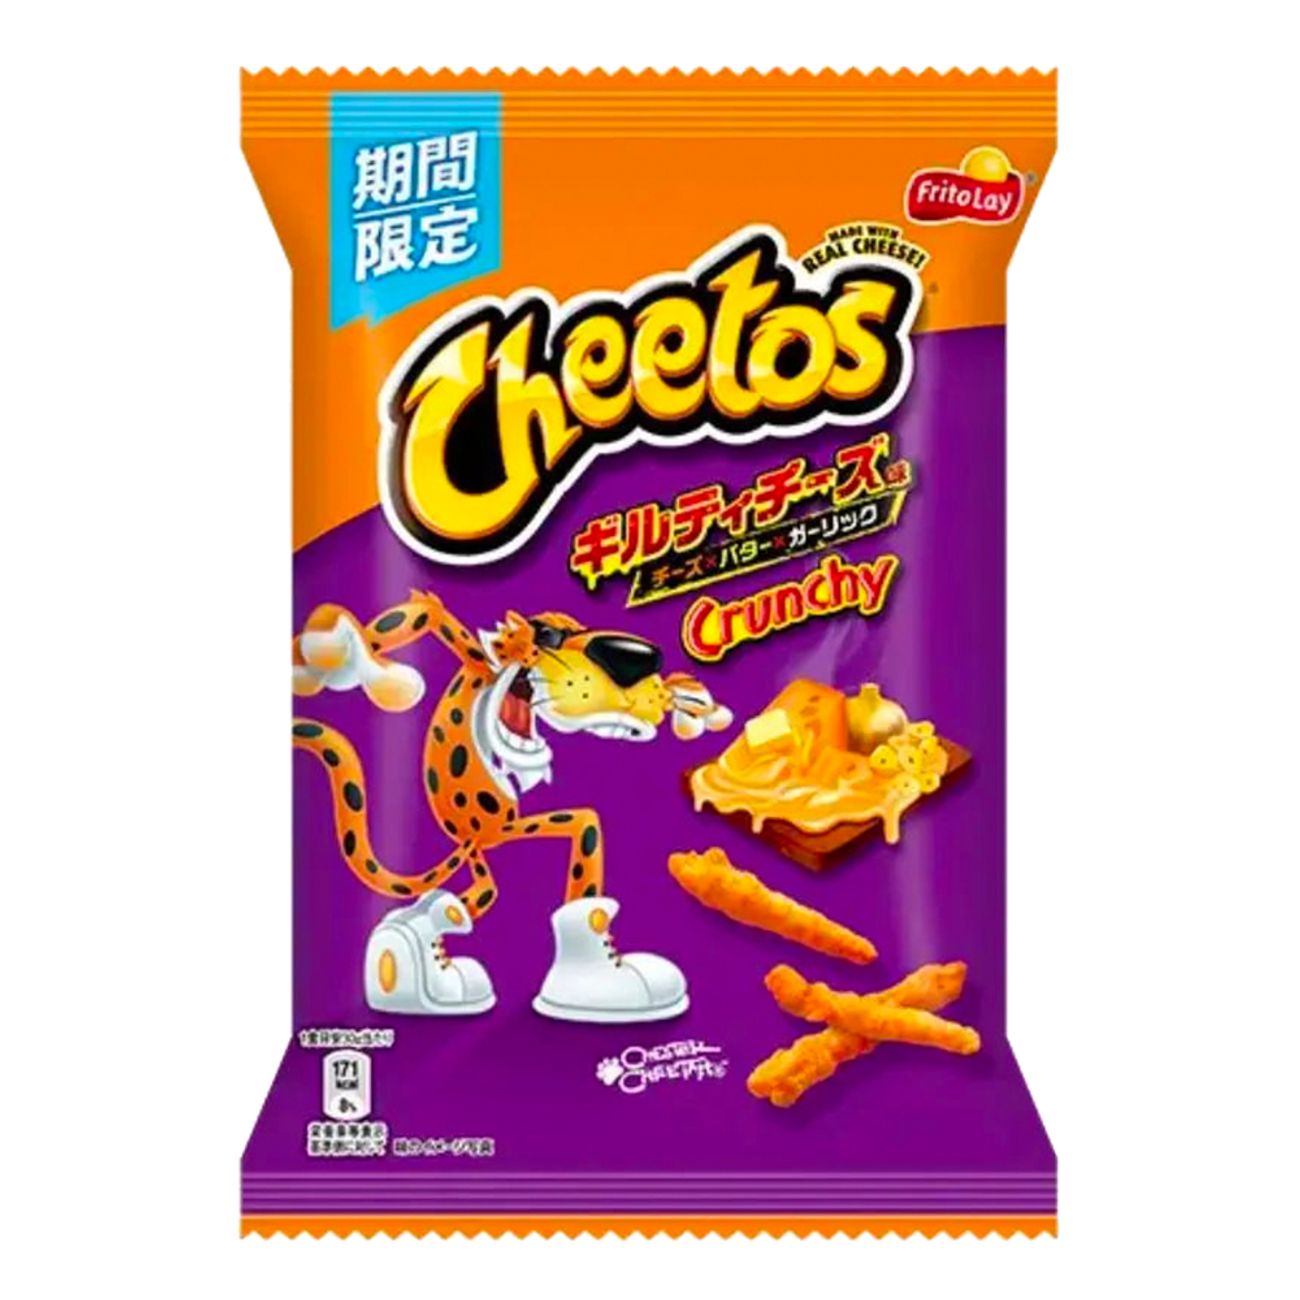 cheetos-guilty-pleasures-cheese-98859-1